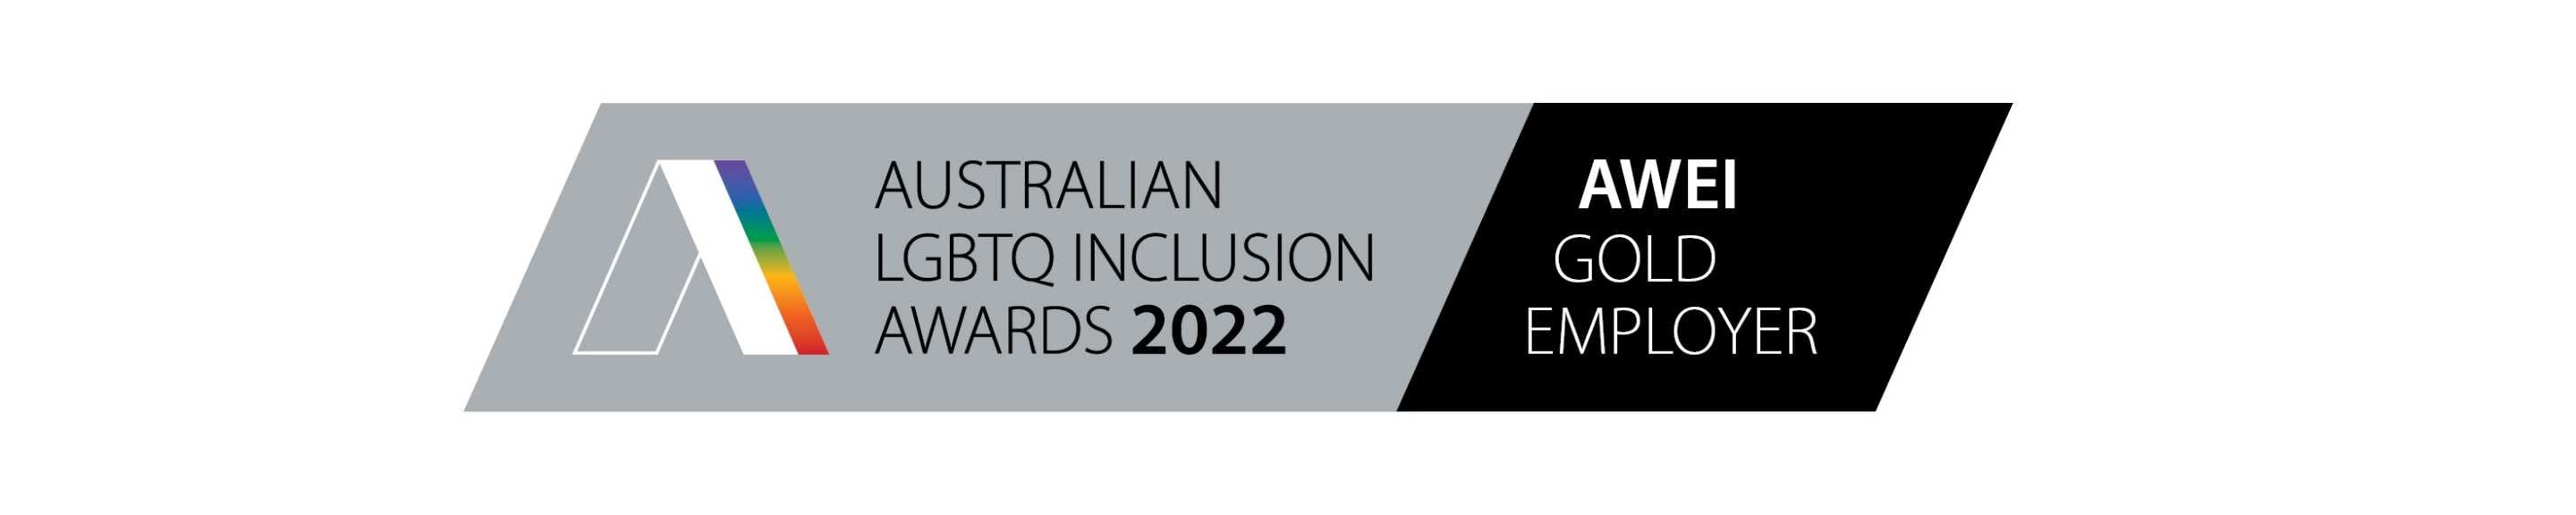 Logo that reads "Australian LGBTIQ Inclusion Awards 2022, AWEI Gold Employer"